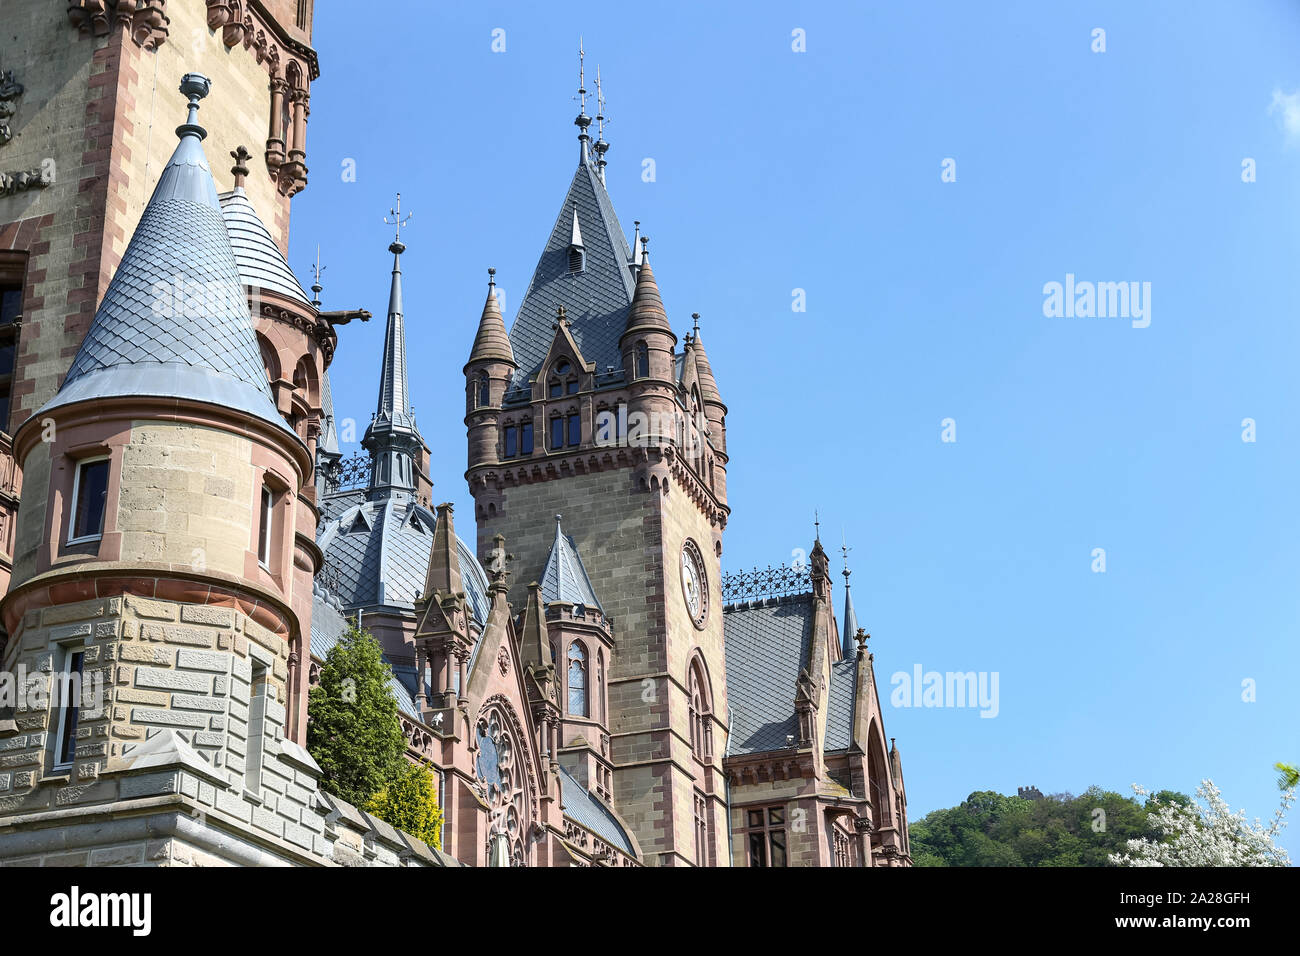 Facade of Schloss Drachenburg in Bonn City, Germany Stock Photo